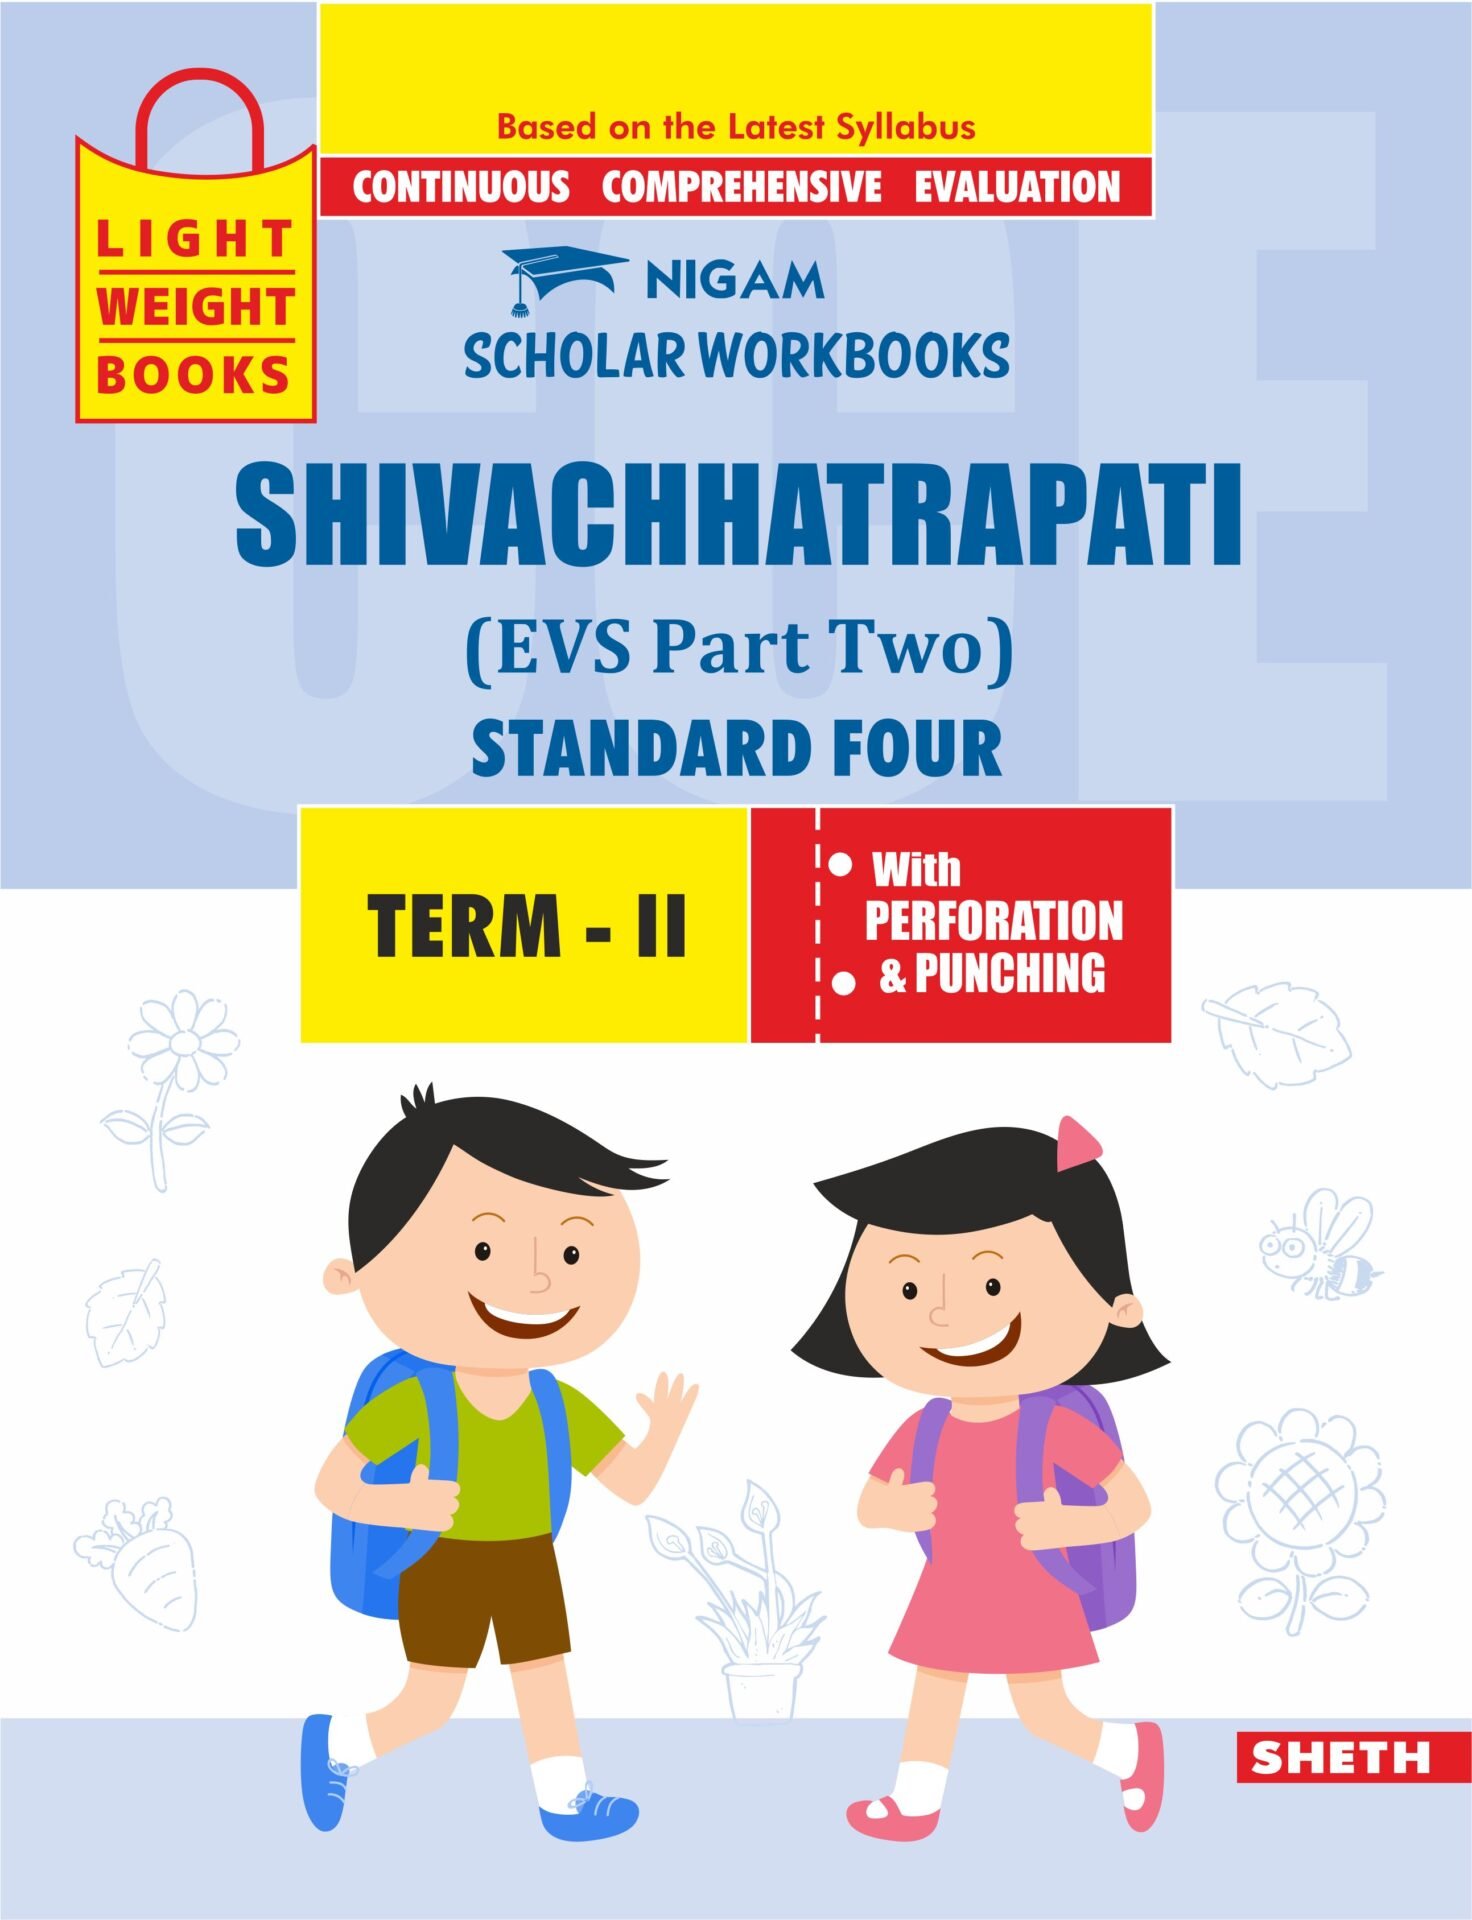 CCE Pattern Nigam Scholar Workbooks Shivachhatrapati EVS Part Two Standard 4 Term 2 1